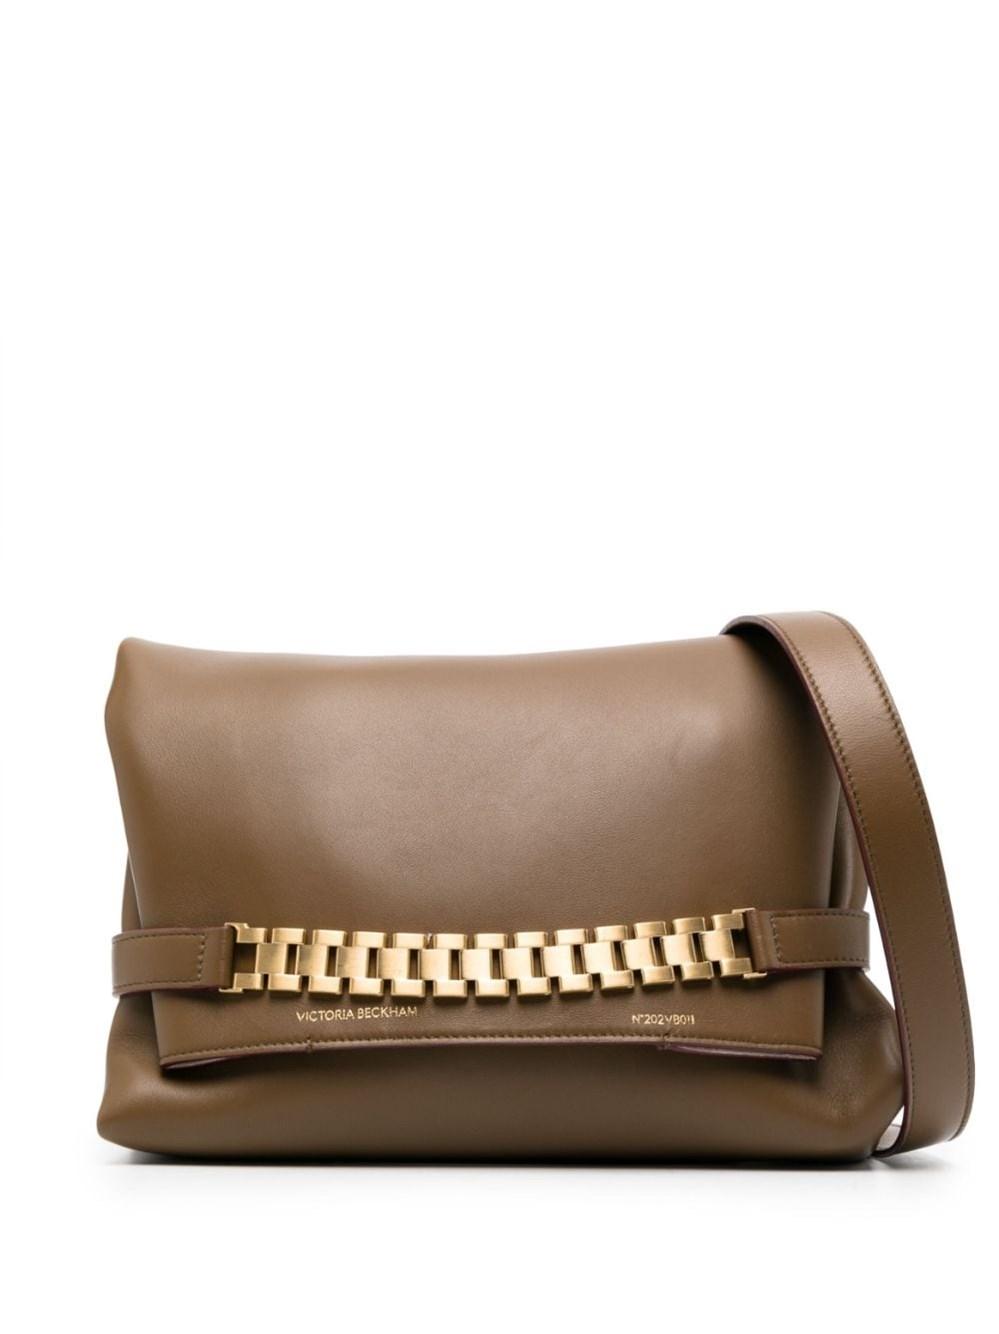 Victoria Beckham Chain Pouch With Strap Khaki Leather Shoulder Bag